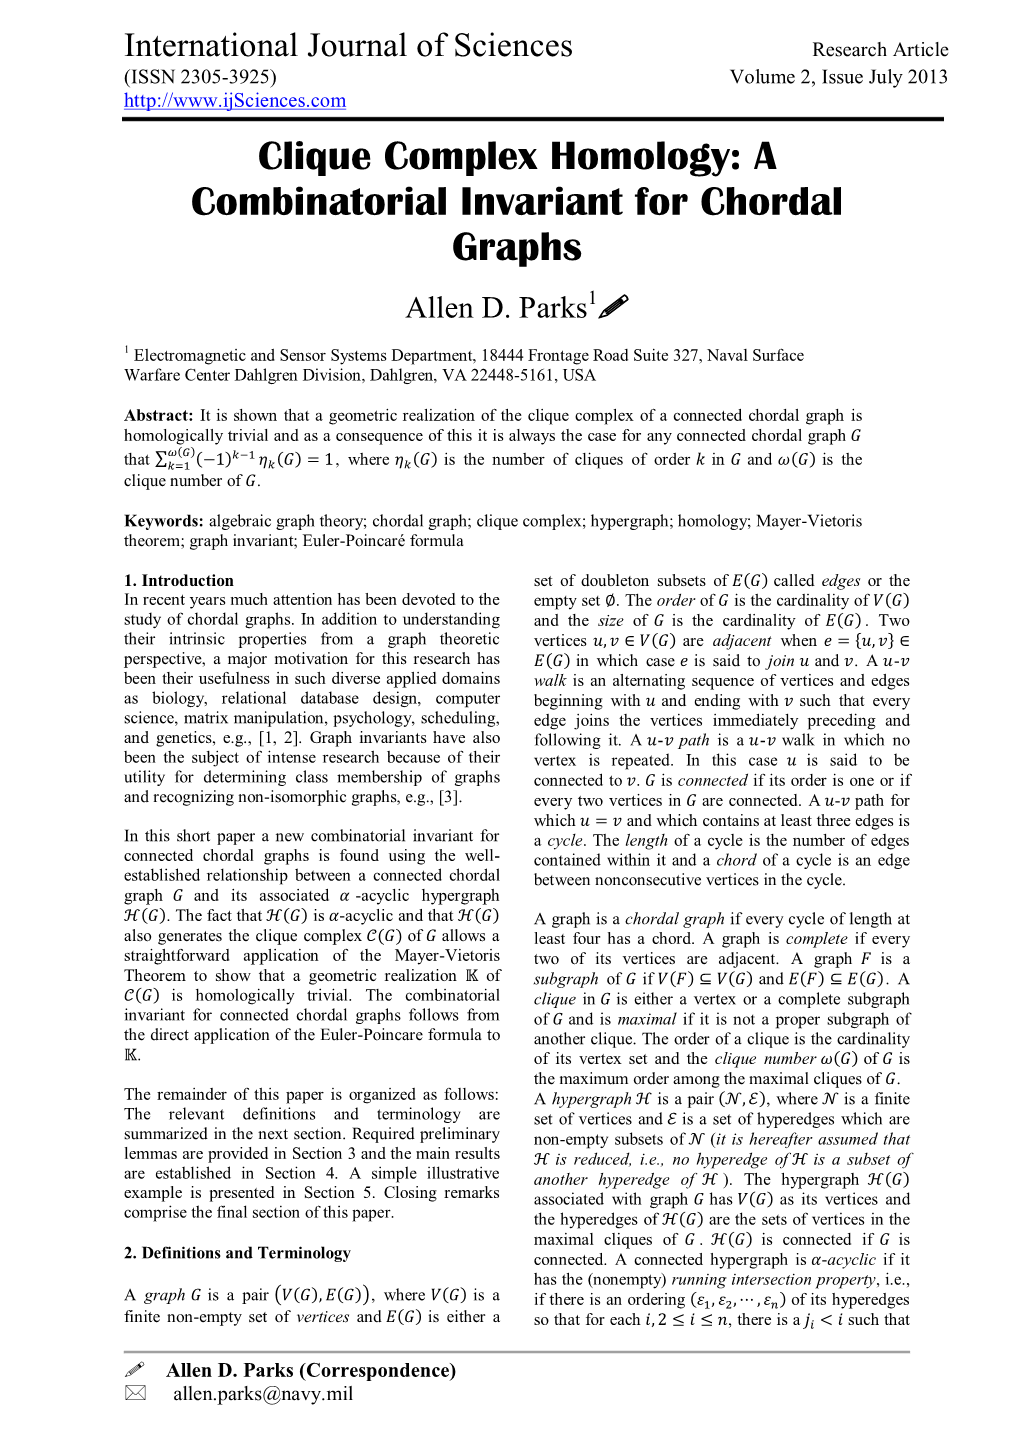 Clique Complex Homology: a Combinatorial Invariant for Chordal Graphs Allen D